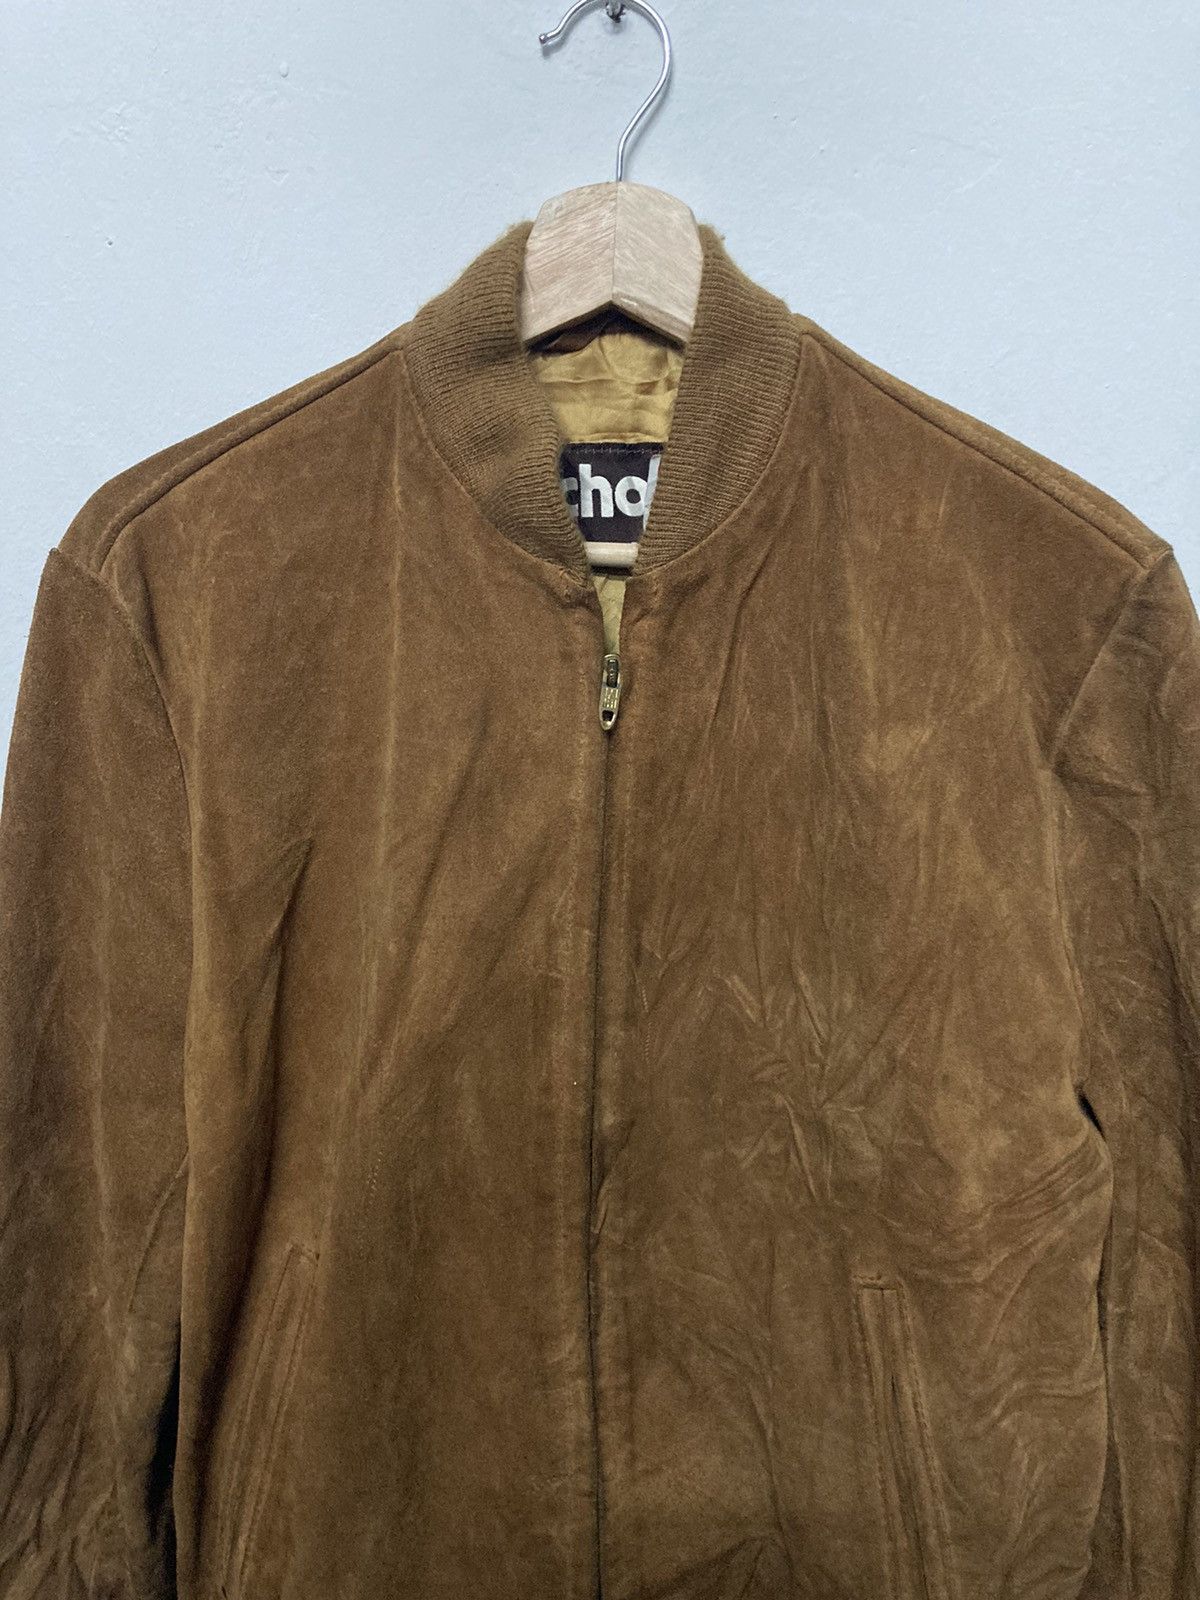 Vintage Schott Suede Full Leather Jacket - 6